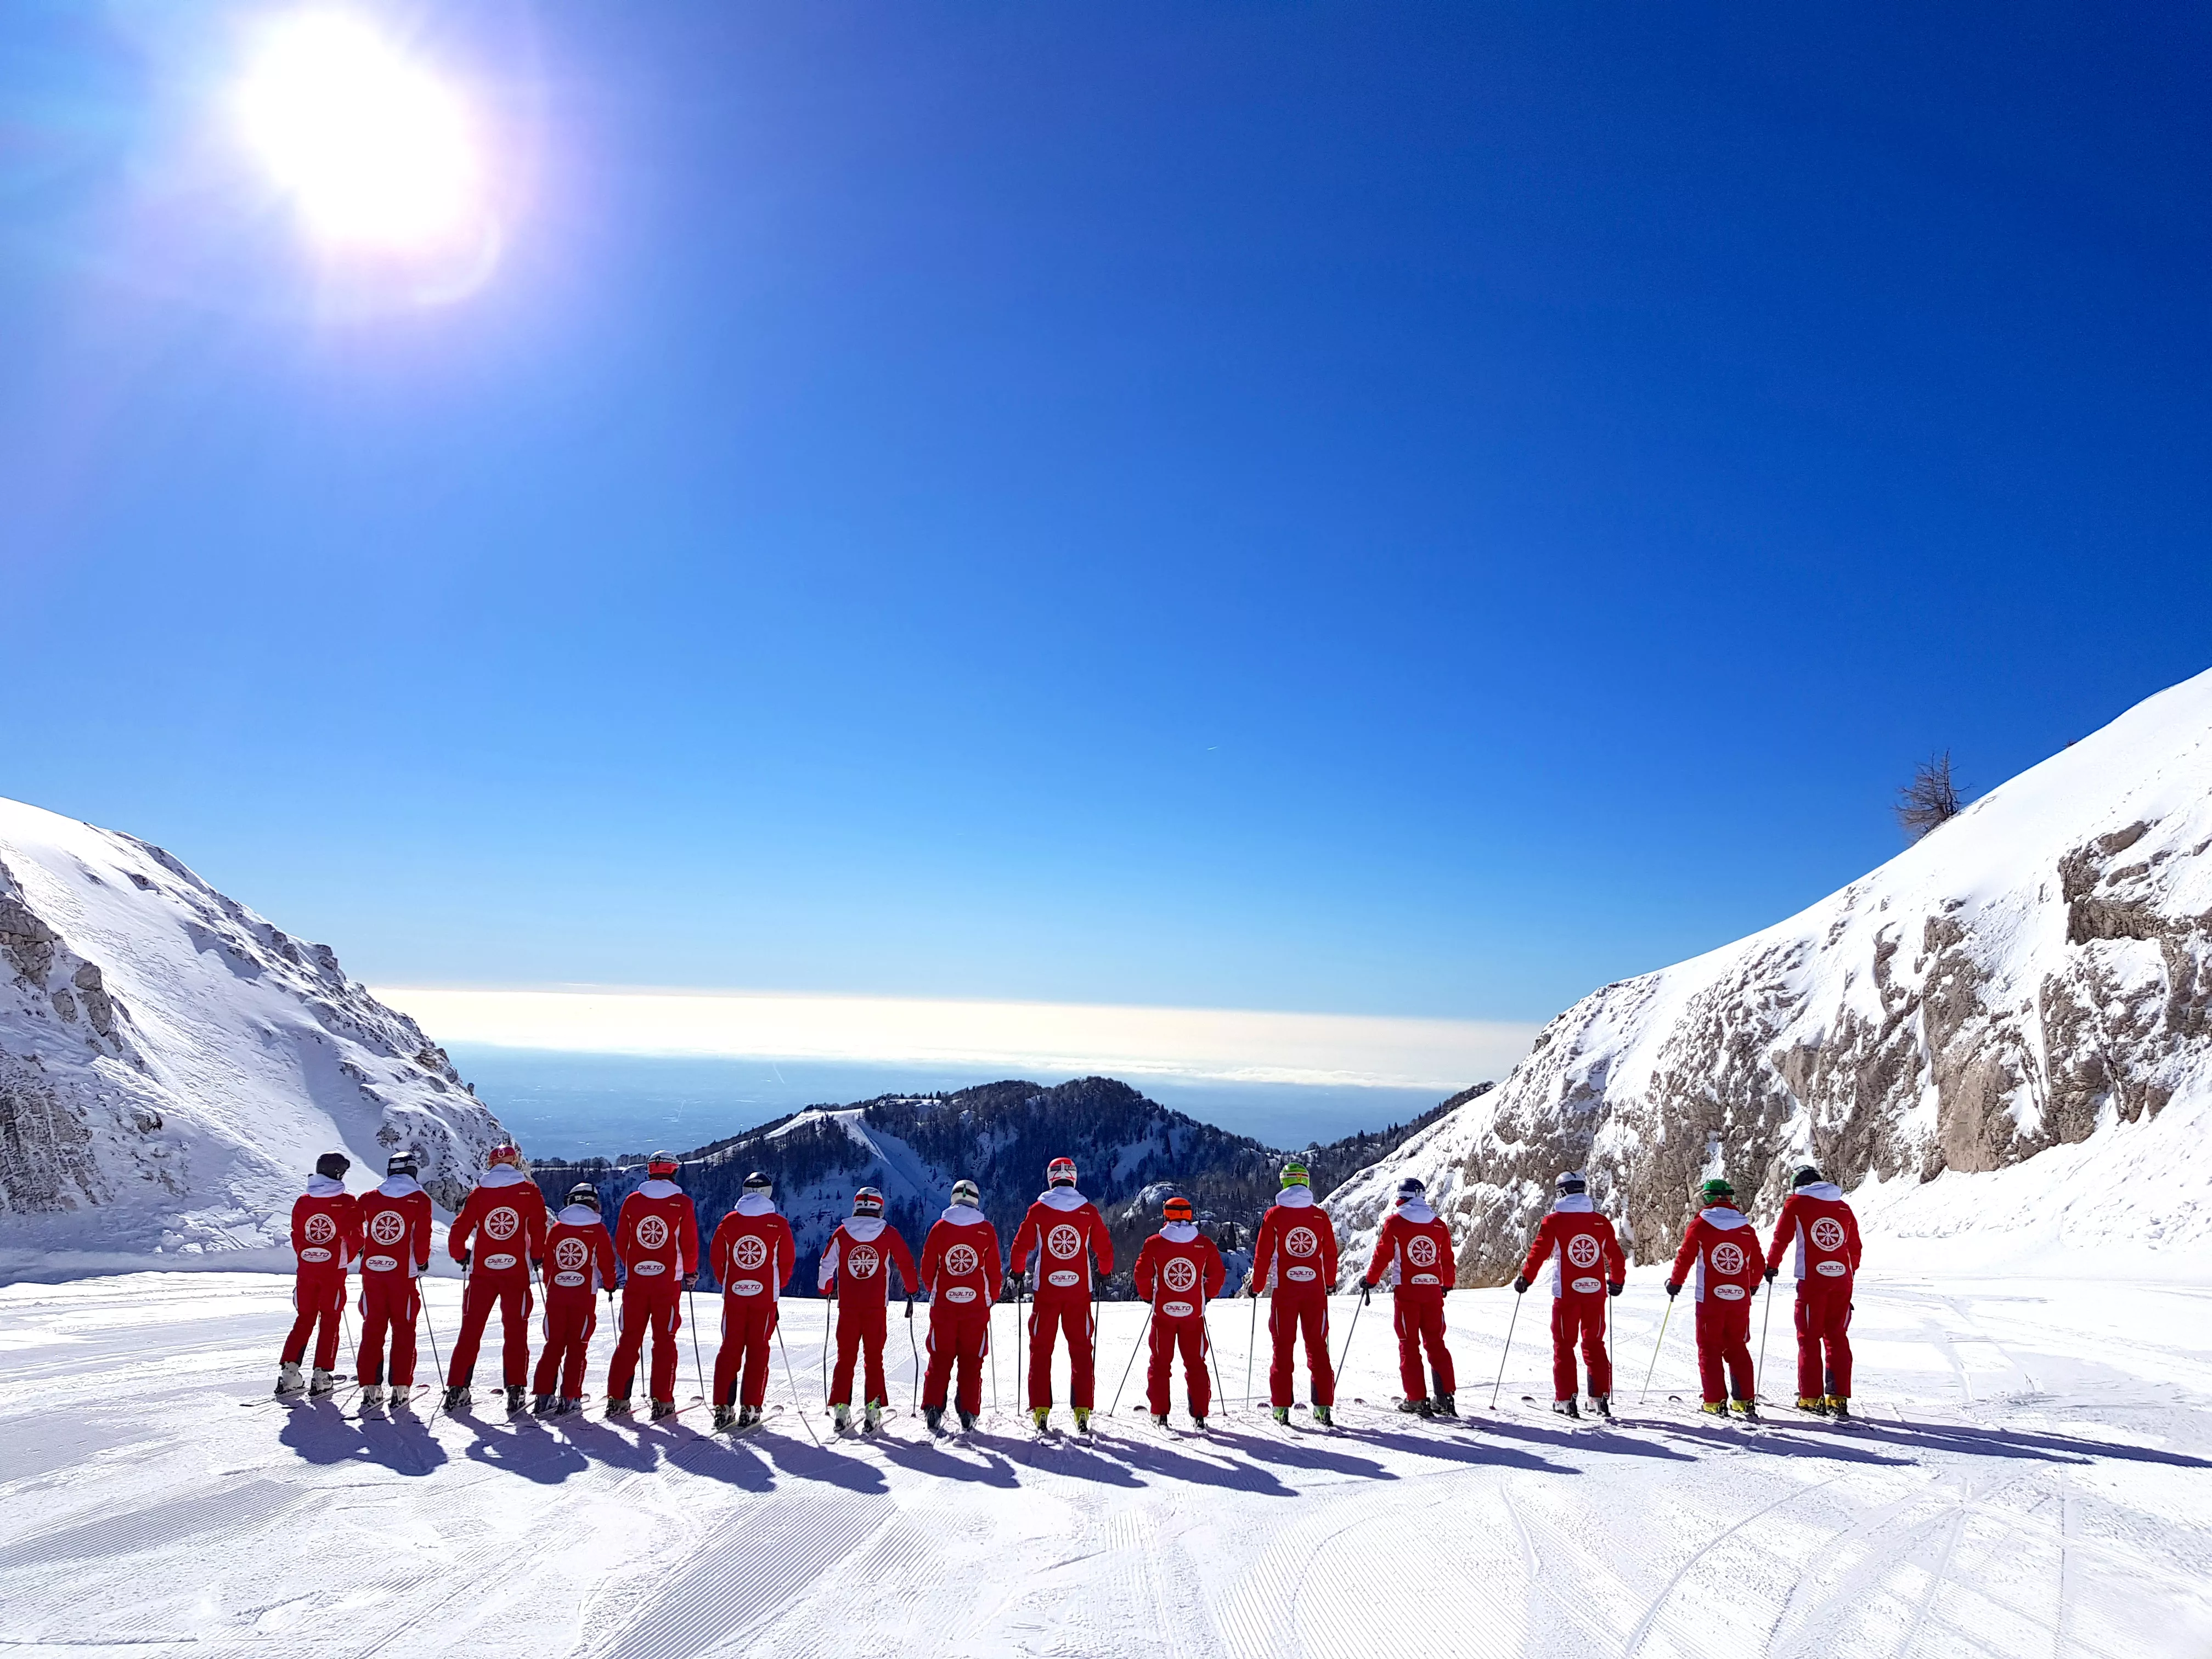 Aviano-Piancavallo Ski School in Italy, Europe | Snowboarding,Skiing - Rated 0.9